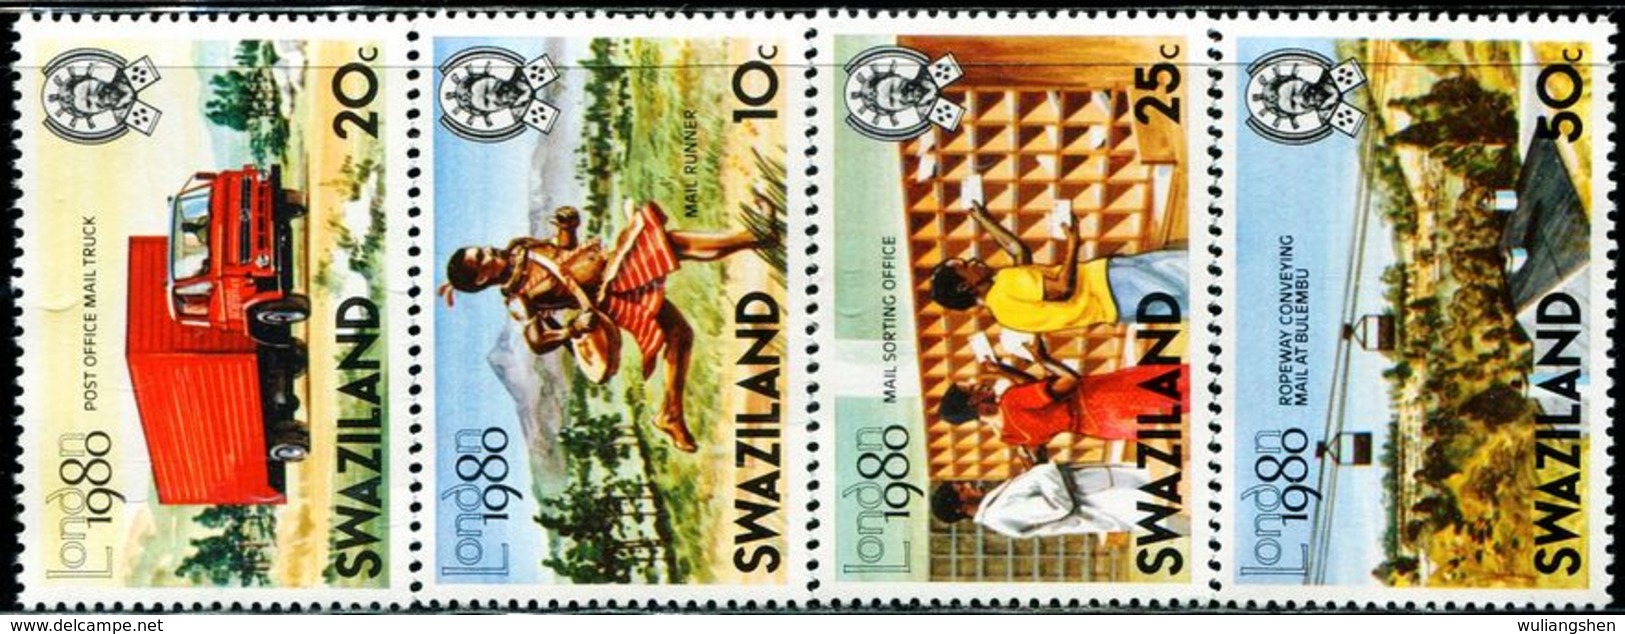 BV0764 Swaziland 1980 Postal Exhibition, Postal Sorting, Etc. 4V MNH - UPU (Wereldpostunie)